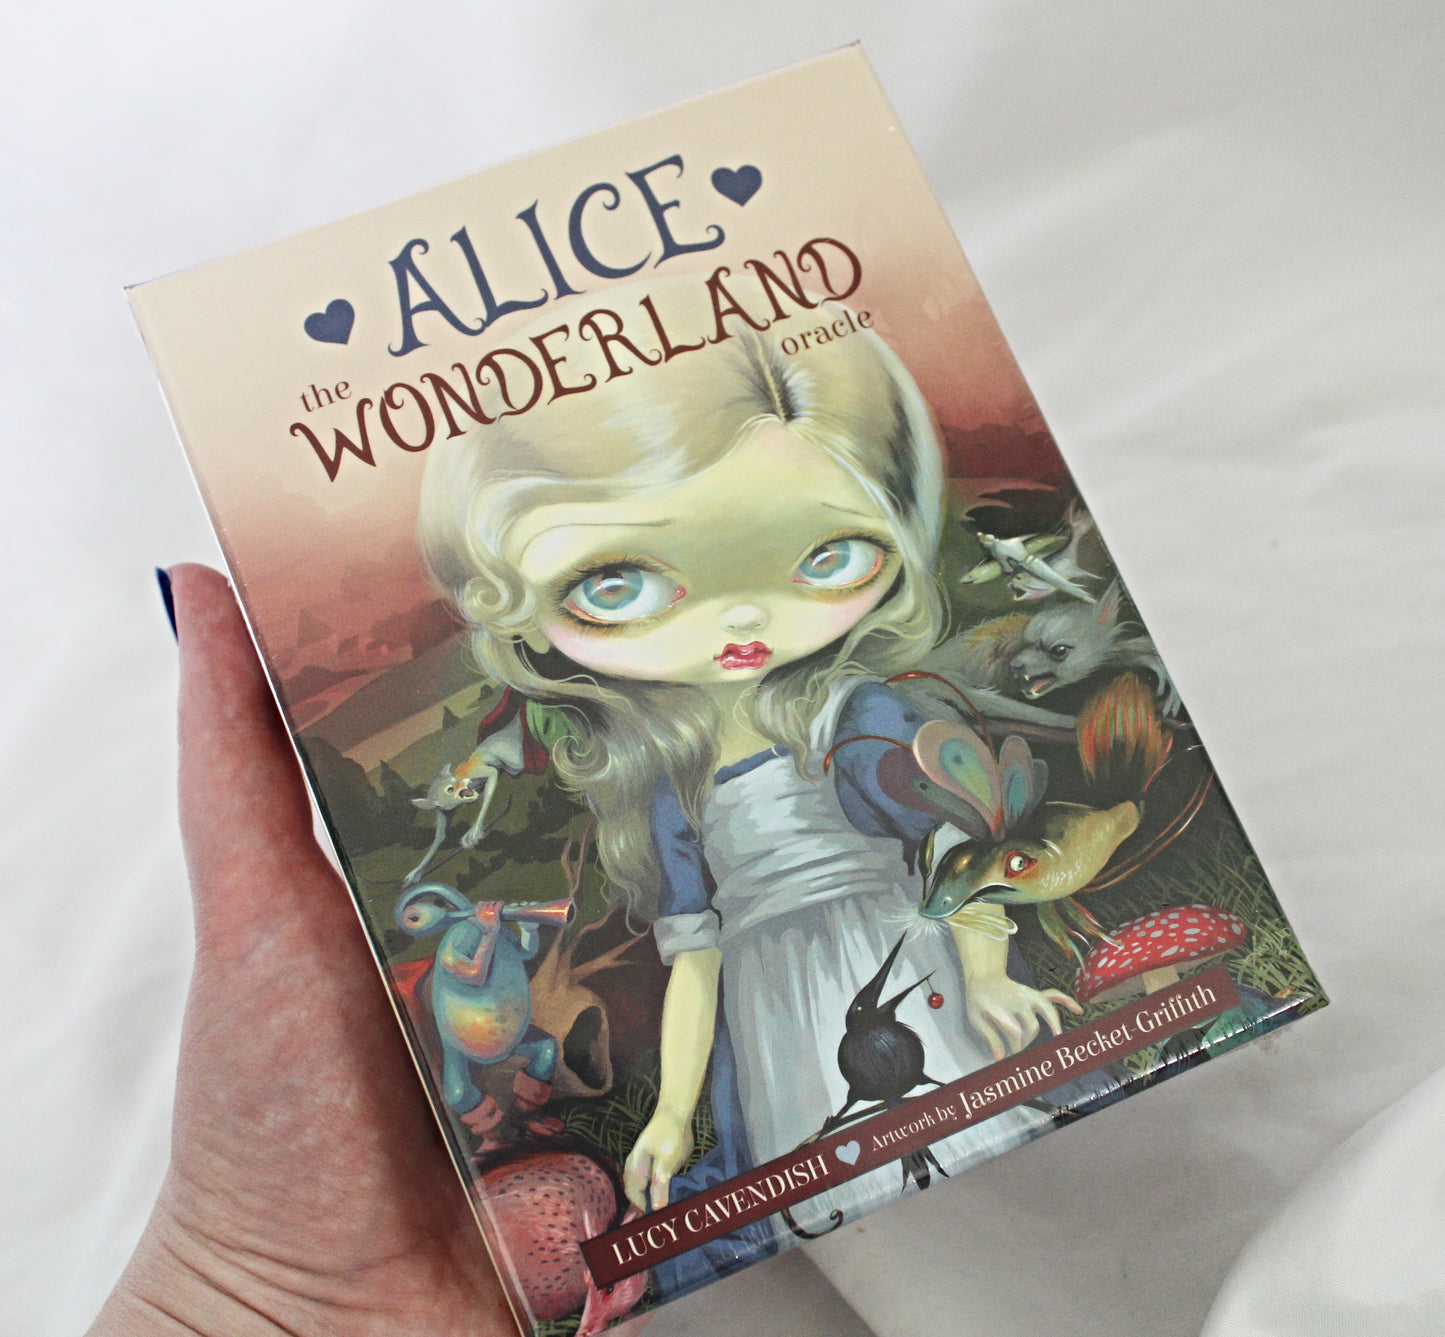 Alice the Wonderland Oracle